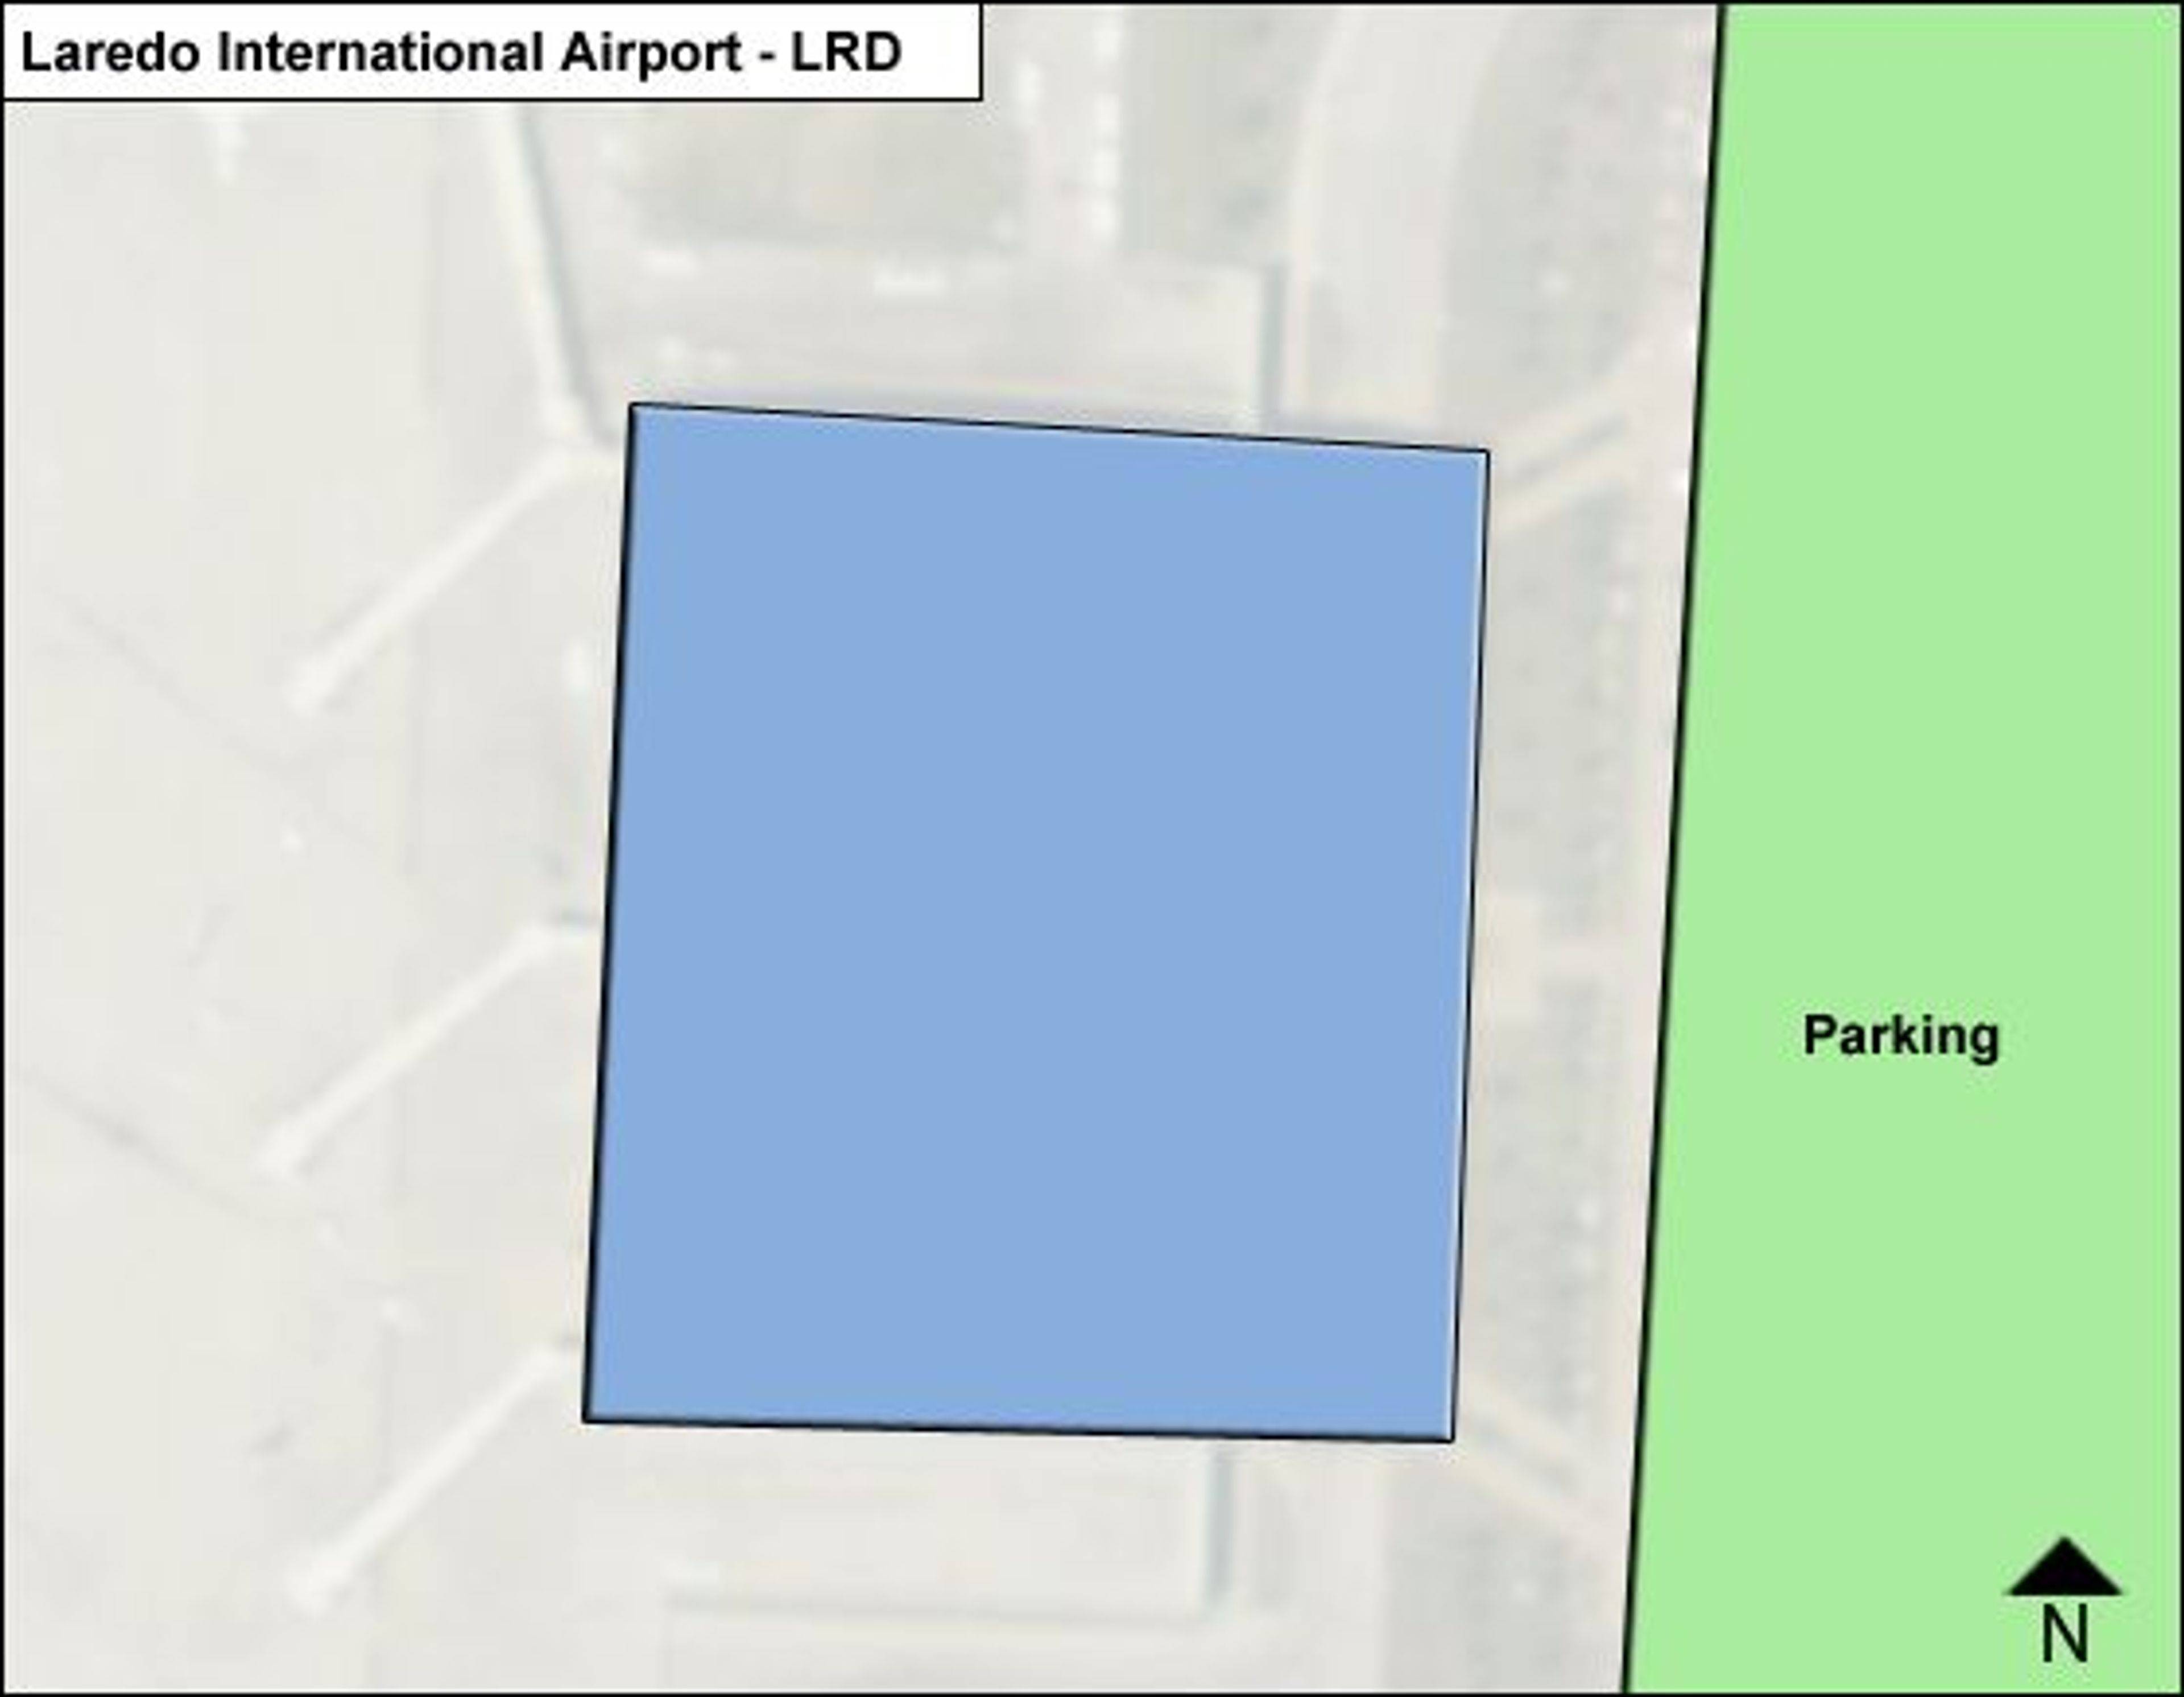 LRD Main Terminal Map